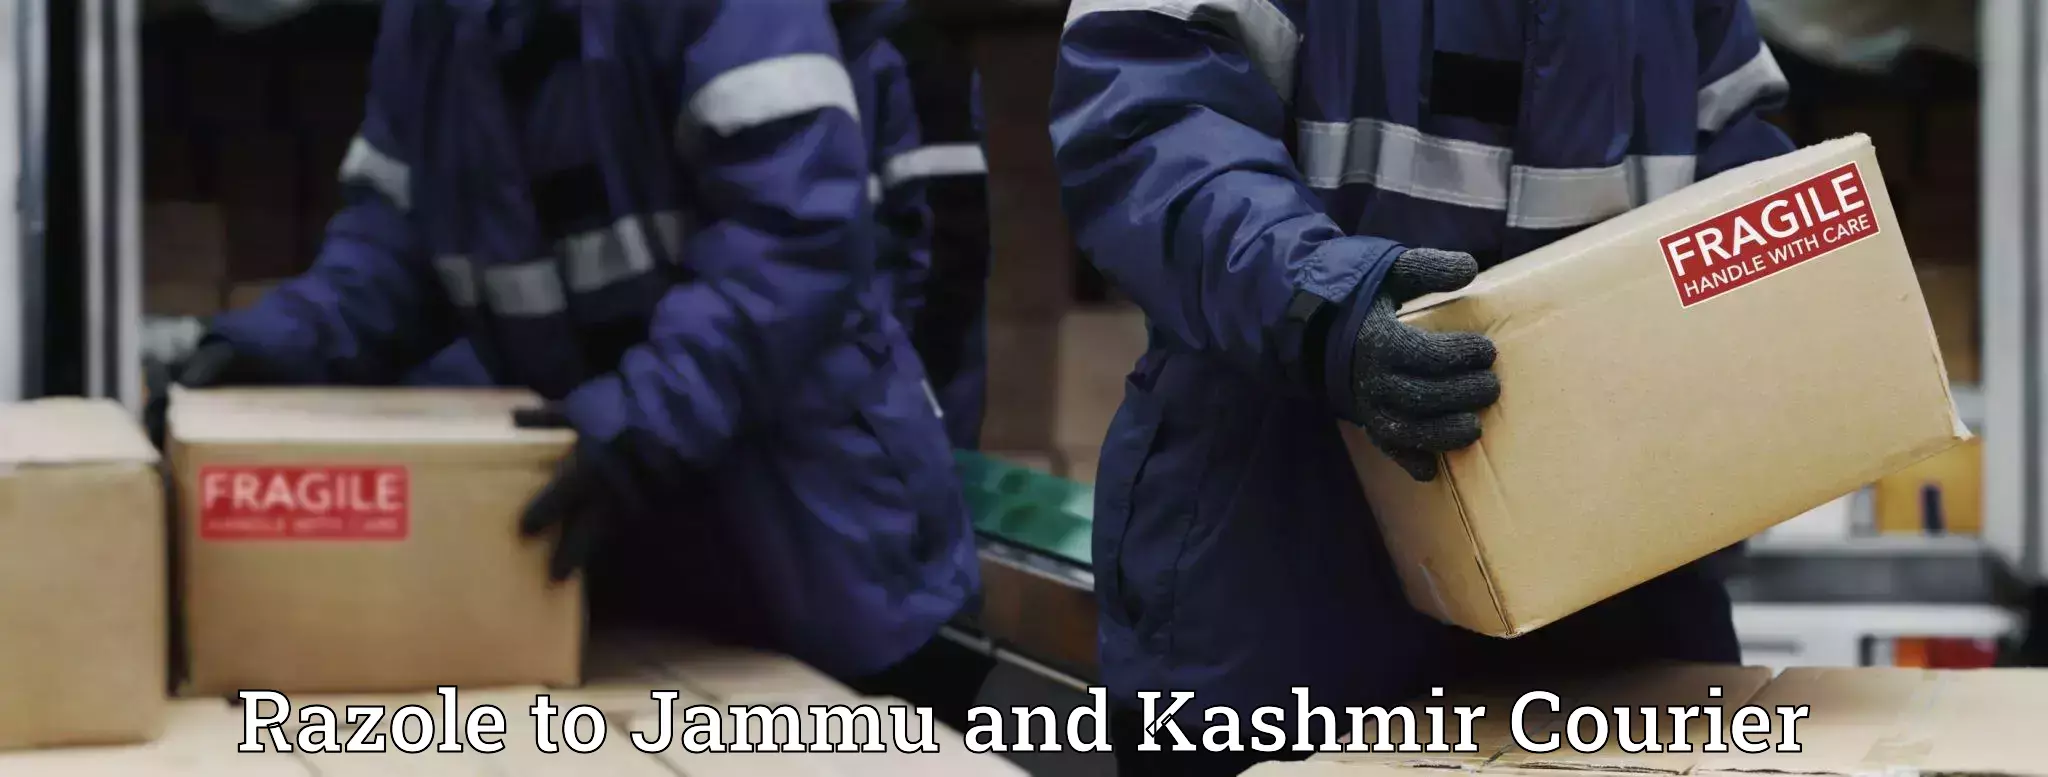 Courier tracking online Razole to University of Kashmir Srinagar